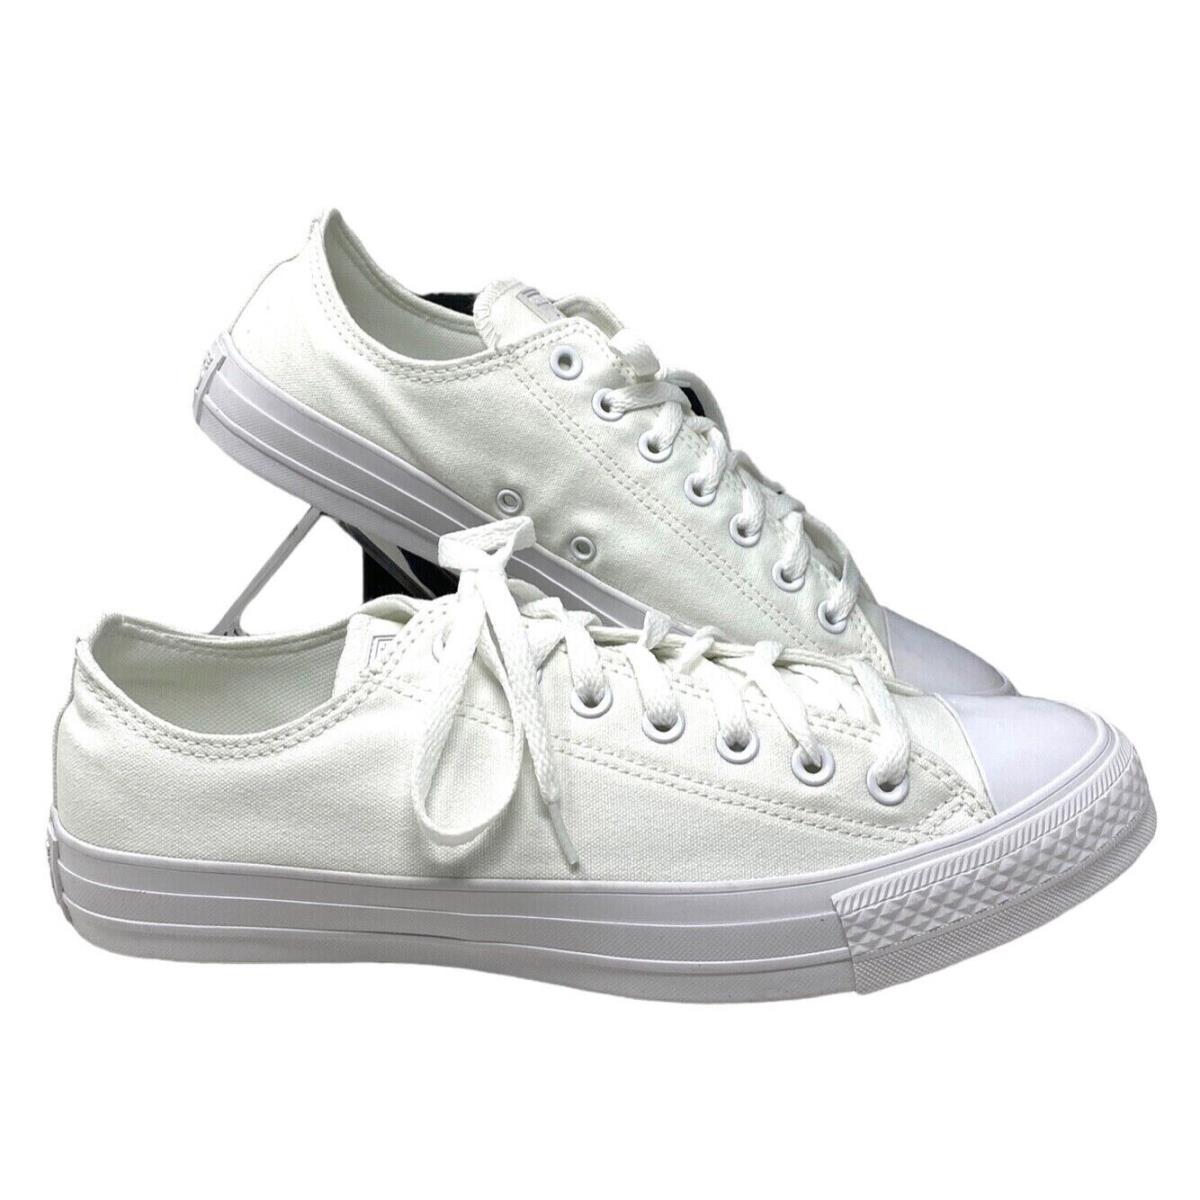 Converse Custom Chuck Taylor Shoes Skate Men s White Canvas Casual Low Top 1U647